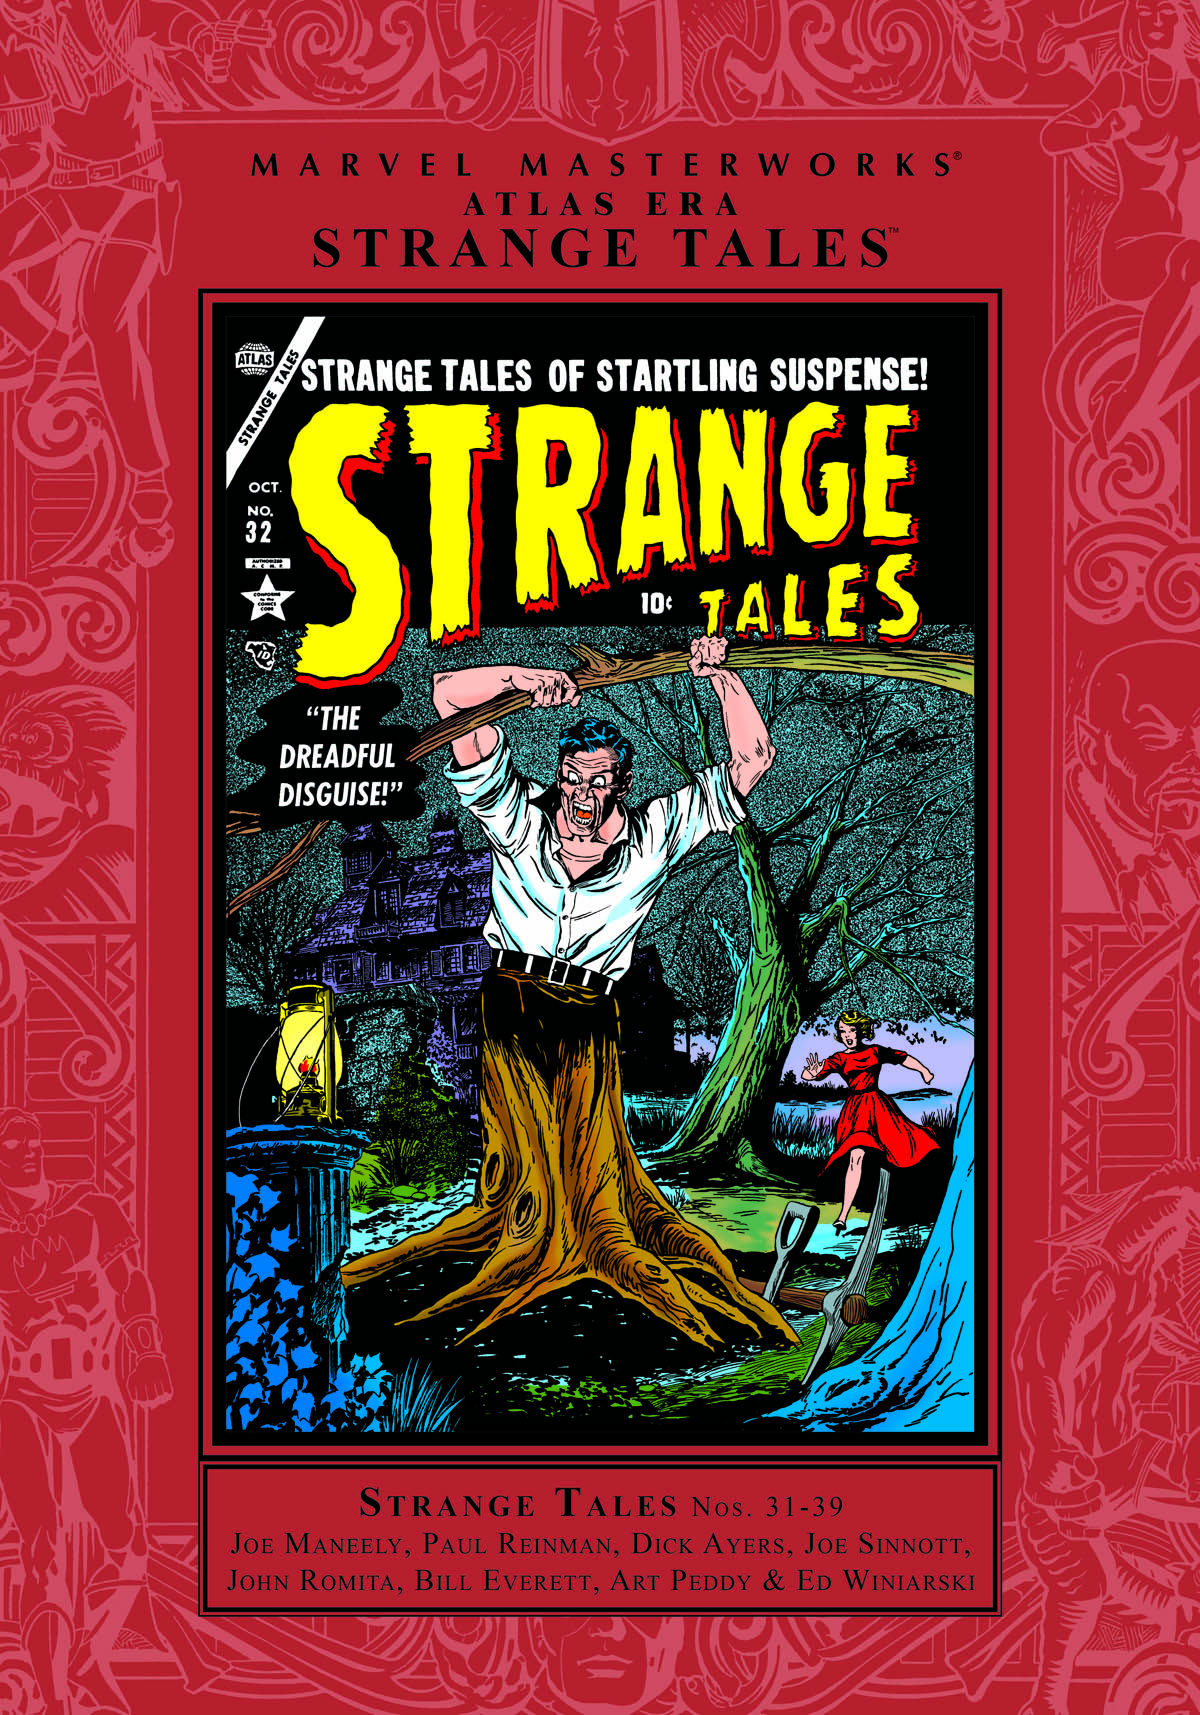 Marvel Masterworks: Atlas Era Strange Tales Vol. 4 (Trade Paperback)